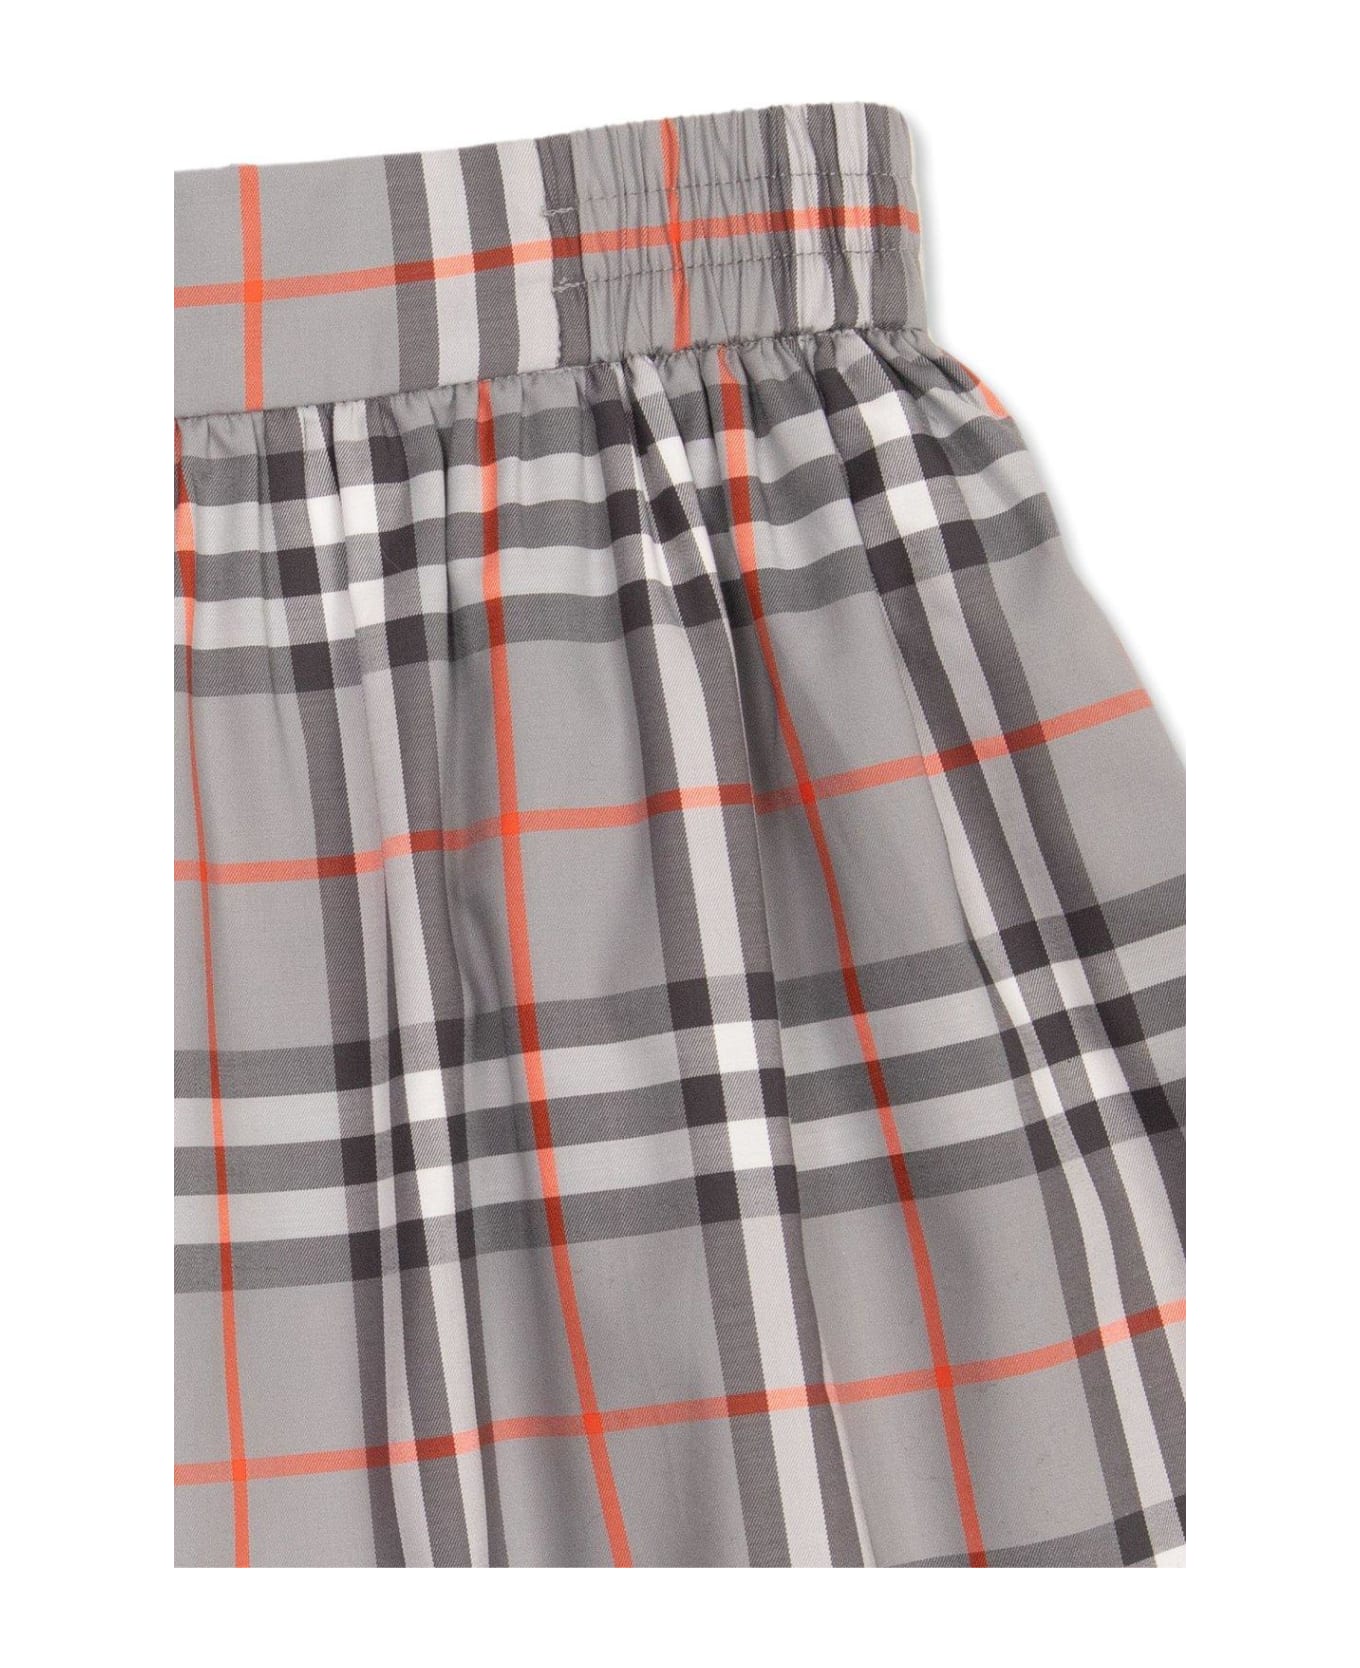 Burberry Checkered Elasticated Waist Skirt - Grigio ボトムス